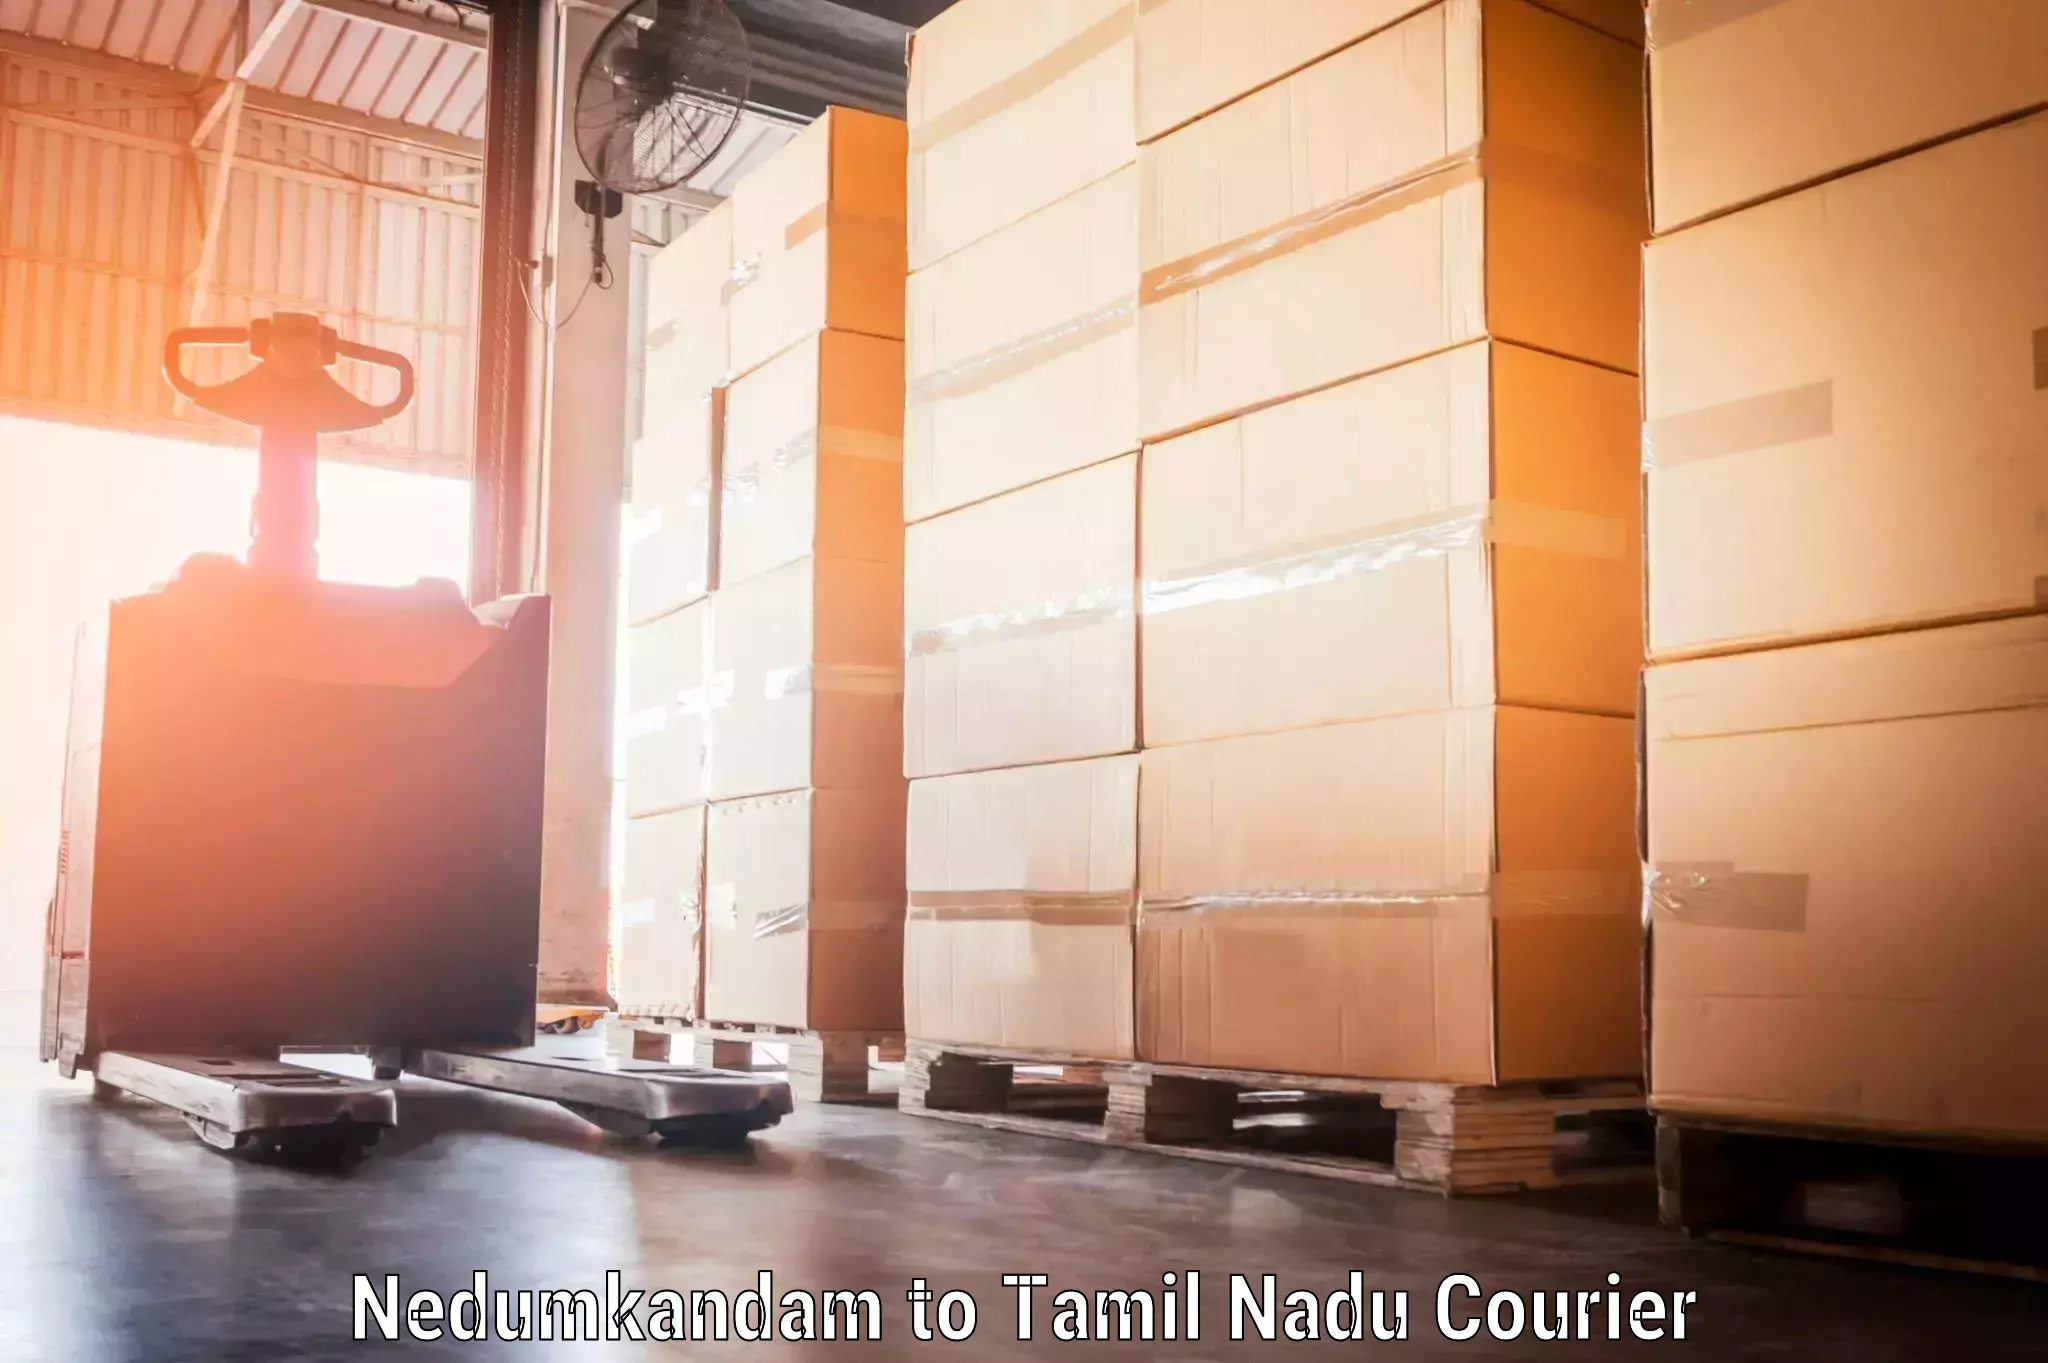 Luggage shipment specialists Nedumkandam to Tamil Nadu